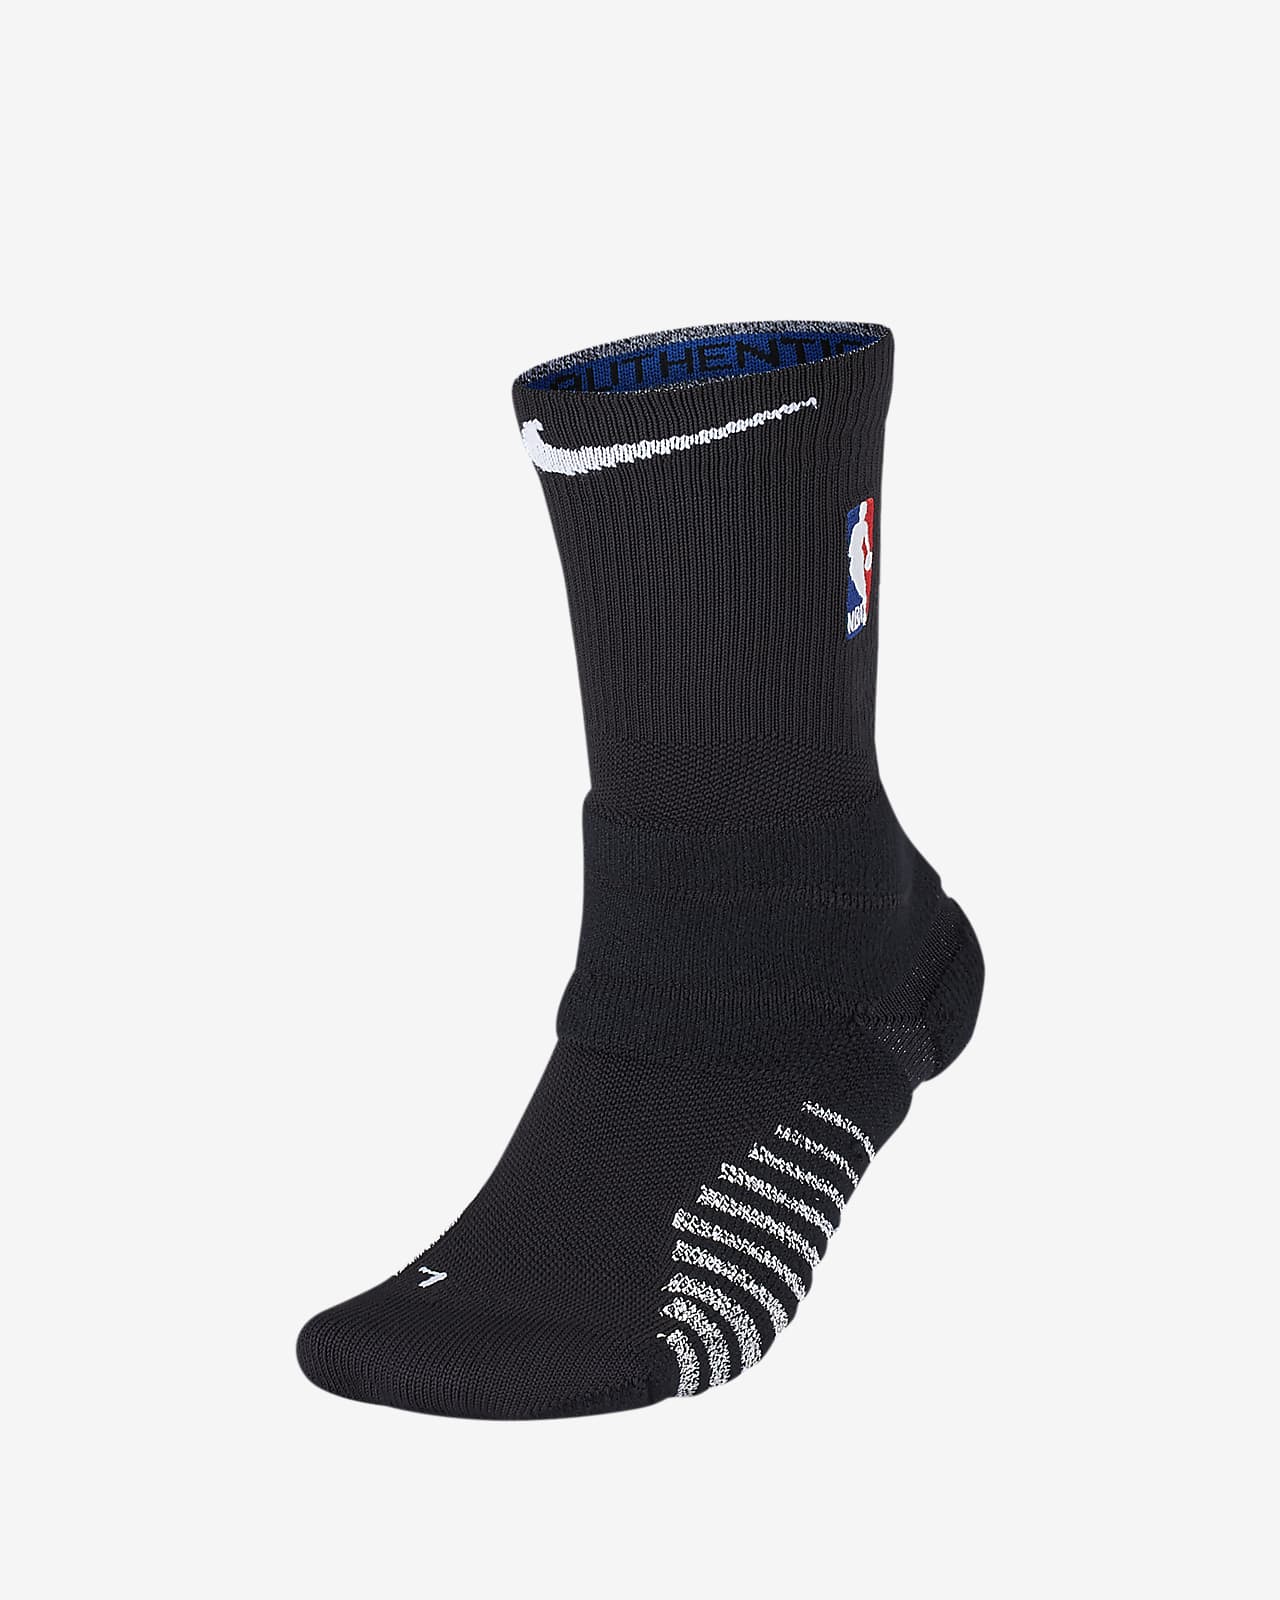 Nike NBA Elite Socks - Power Grips/Grip Quick - White/Black- Large and  Medium 